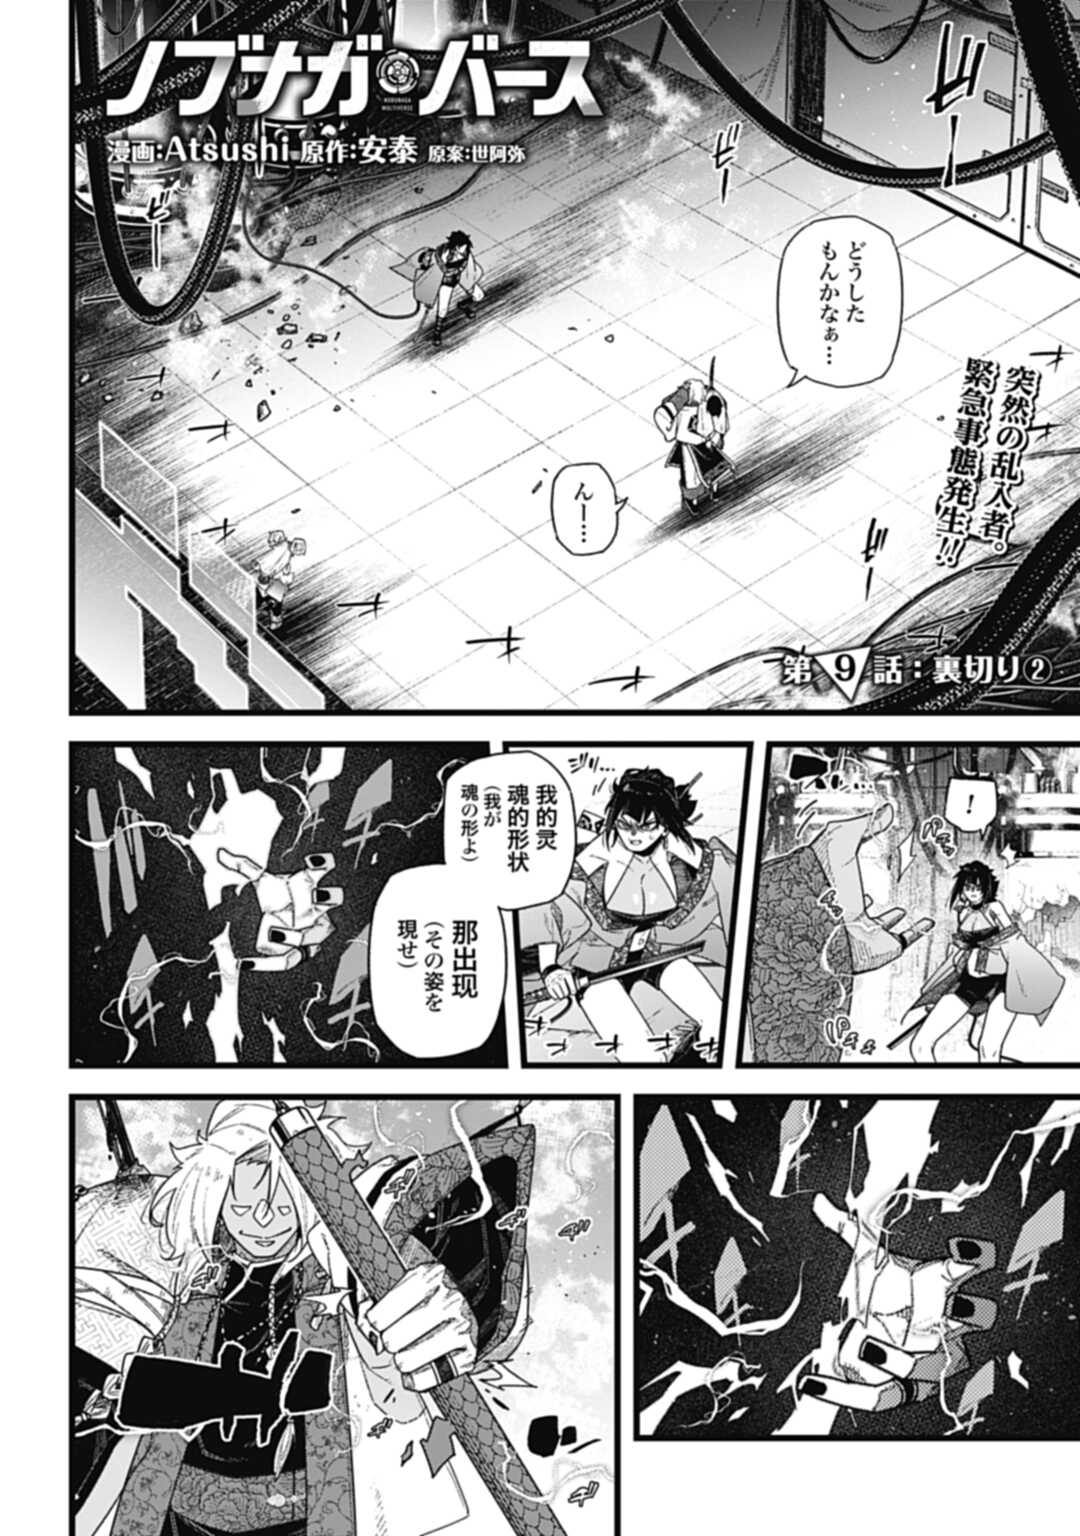 Nobunaga Multiverse - Chapter 9.2 - Page 1